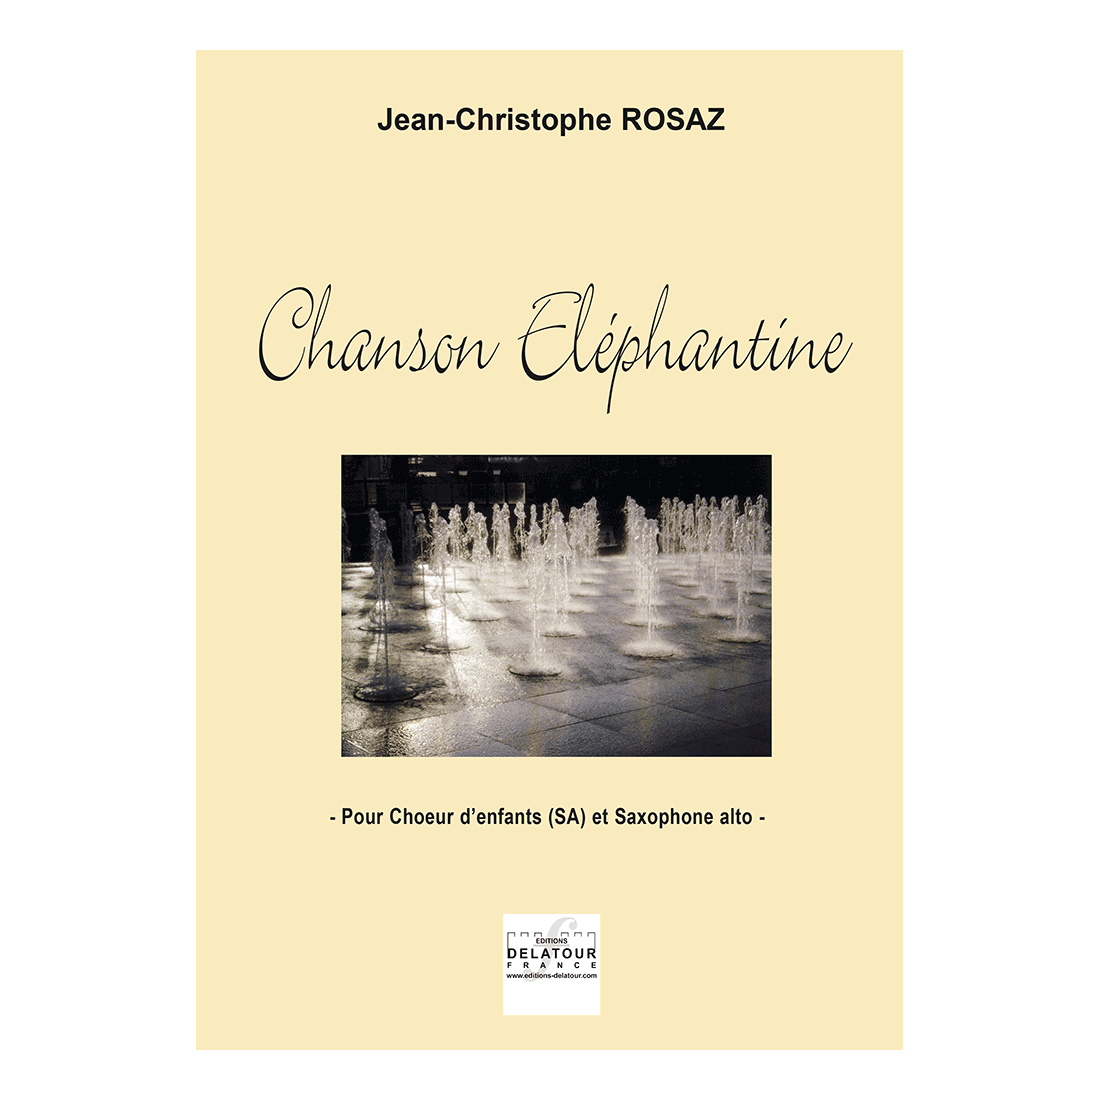 Chanson éléphantine for children's choir (SA) and alto saxophone